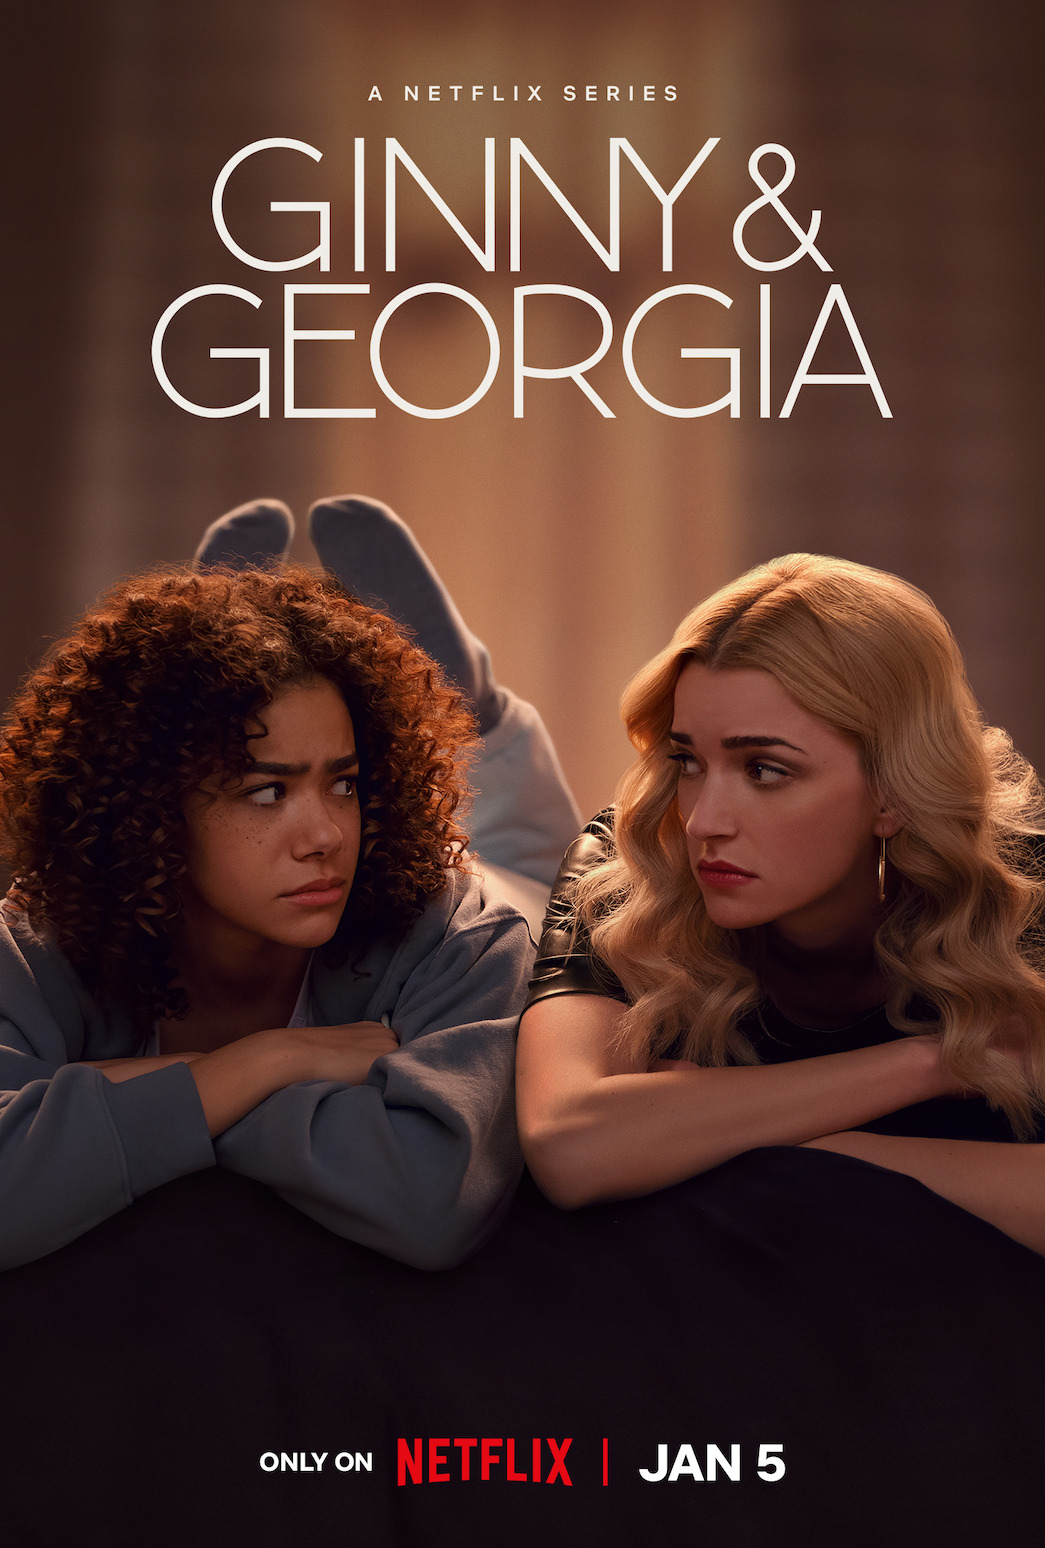 [TV] Ginny & Georgia Season 2 (Netflix)